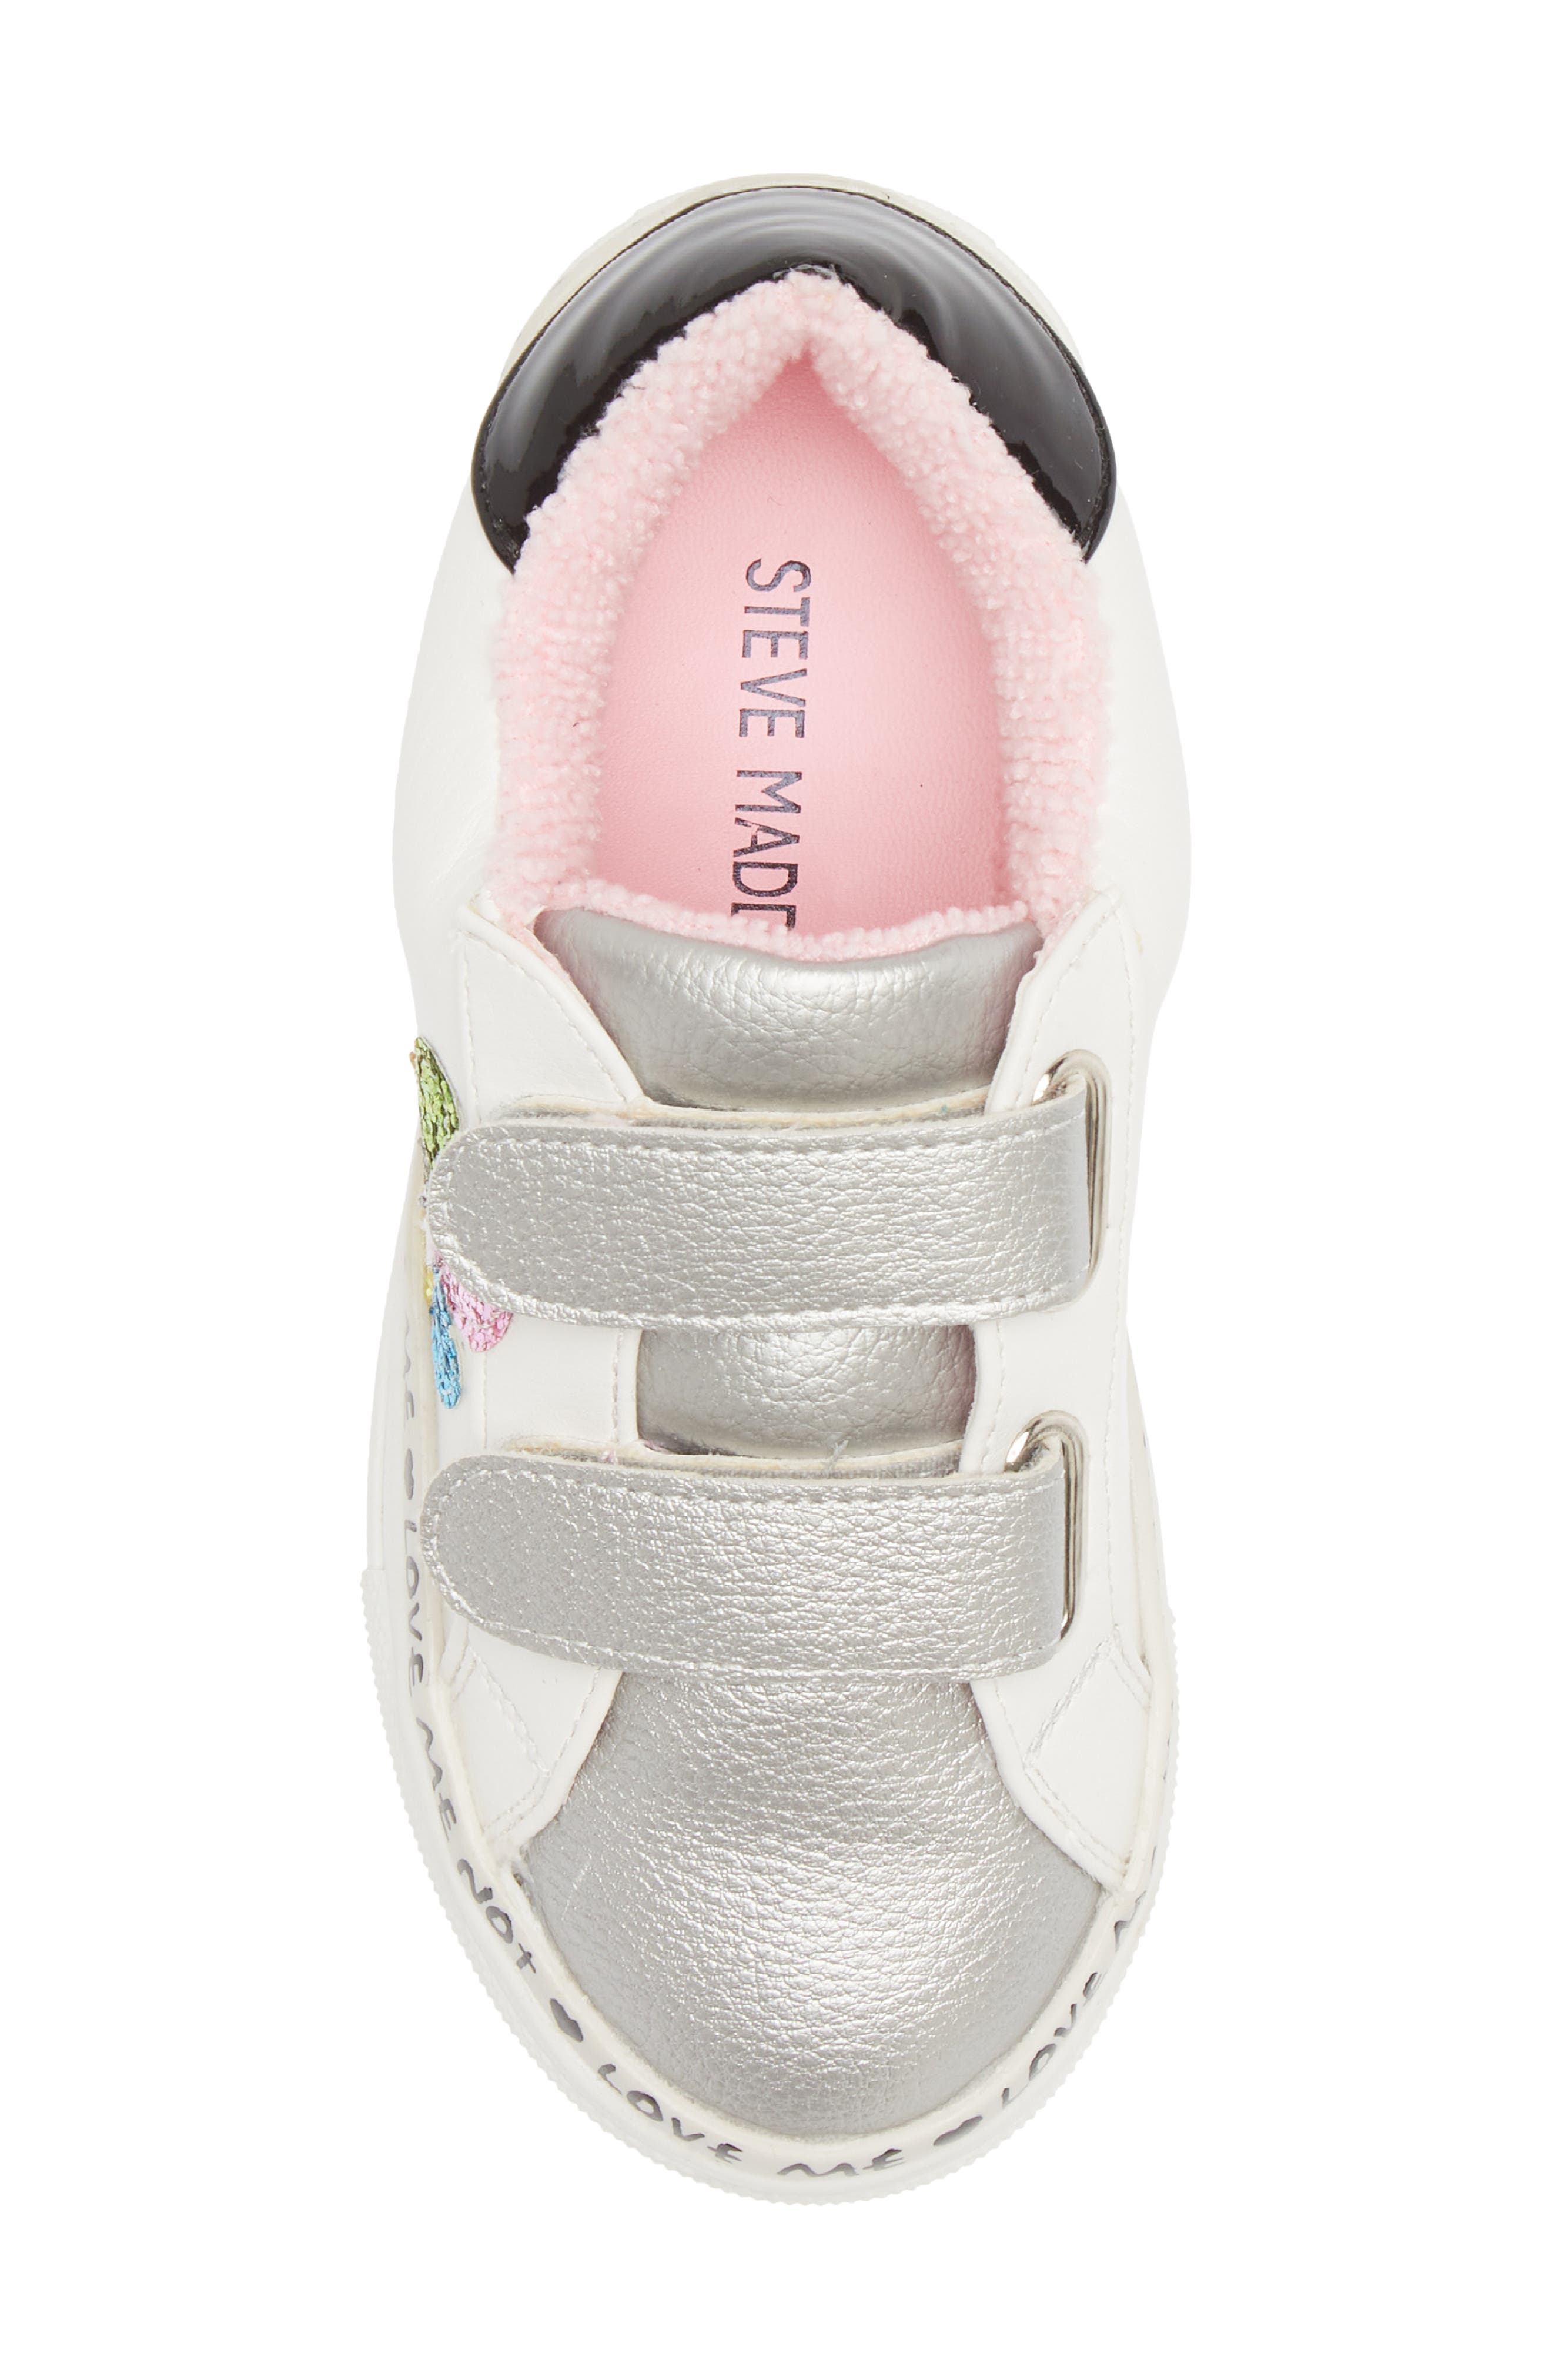 Wonder Nation Infant Girls Pre Walk Casual Glitter Sparkle Shoes White 3,4,5 NEW 